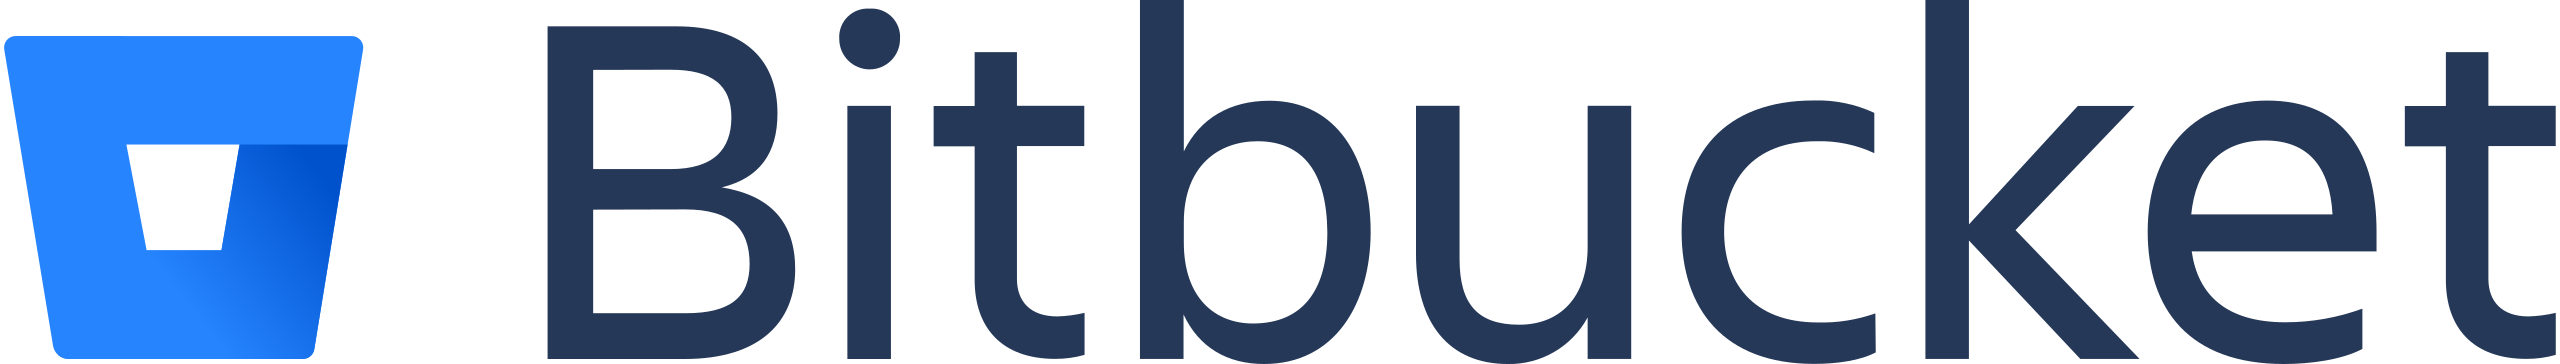 Bitbucket logo blue.svg